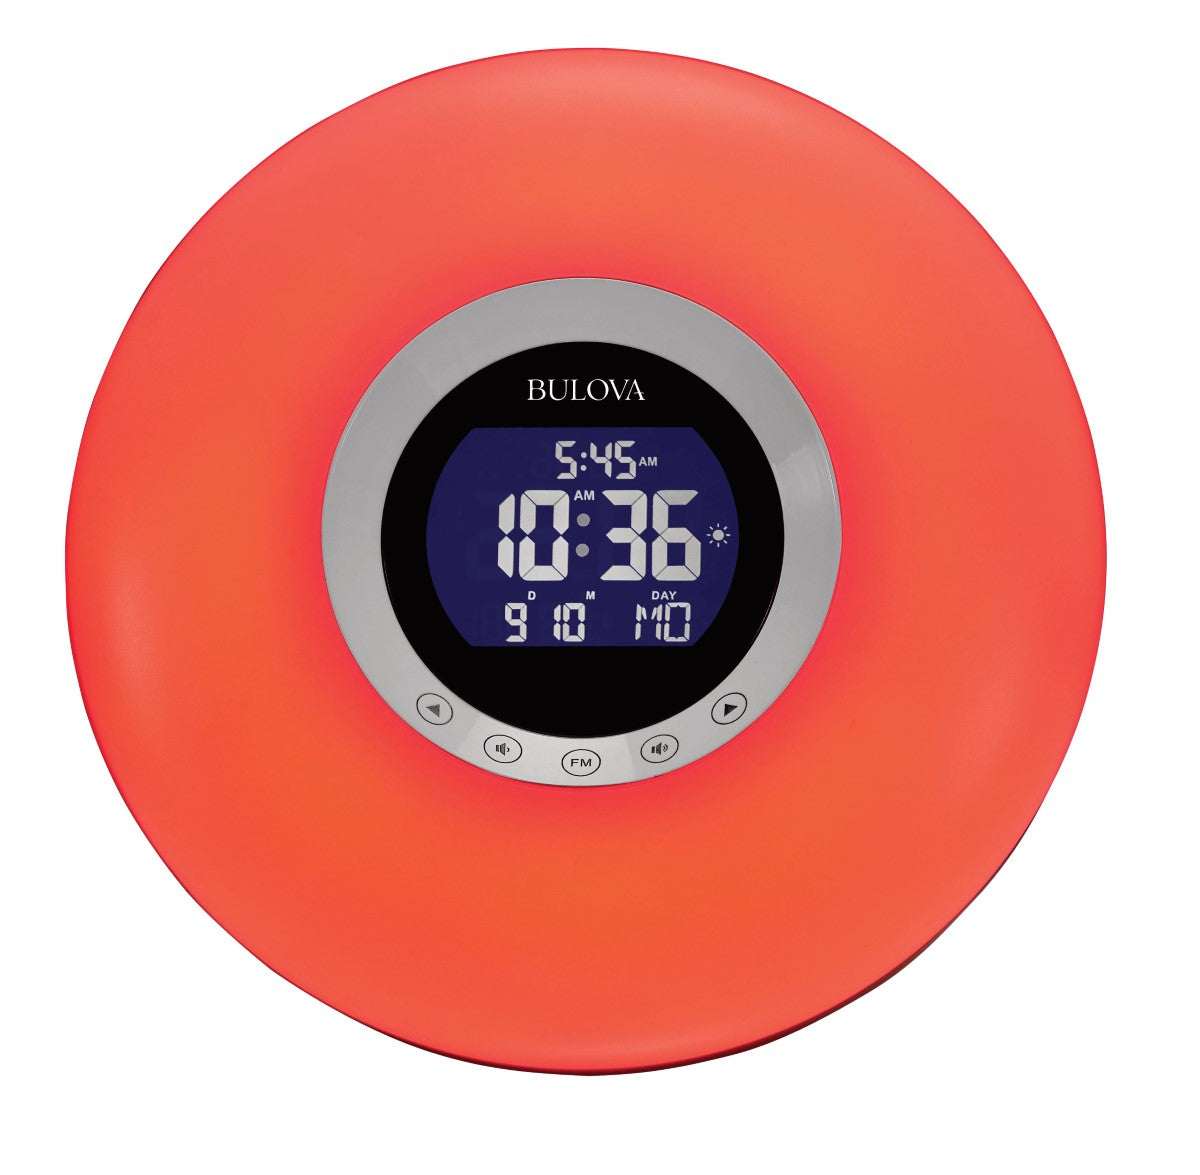 Bulova B1377 Multi-Wake LED Tabletop Alarm Clock